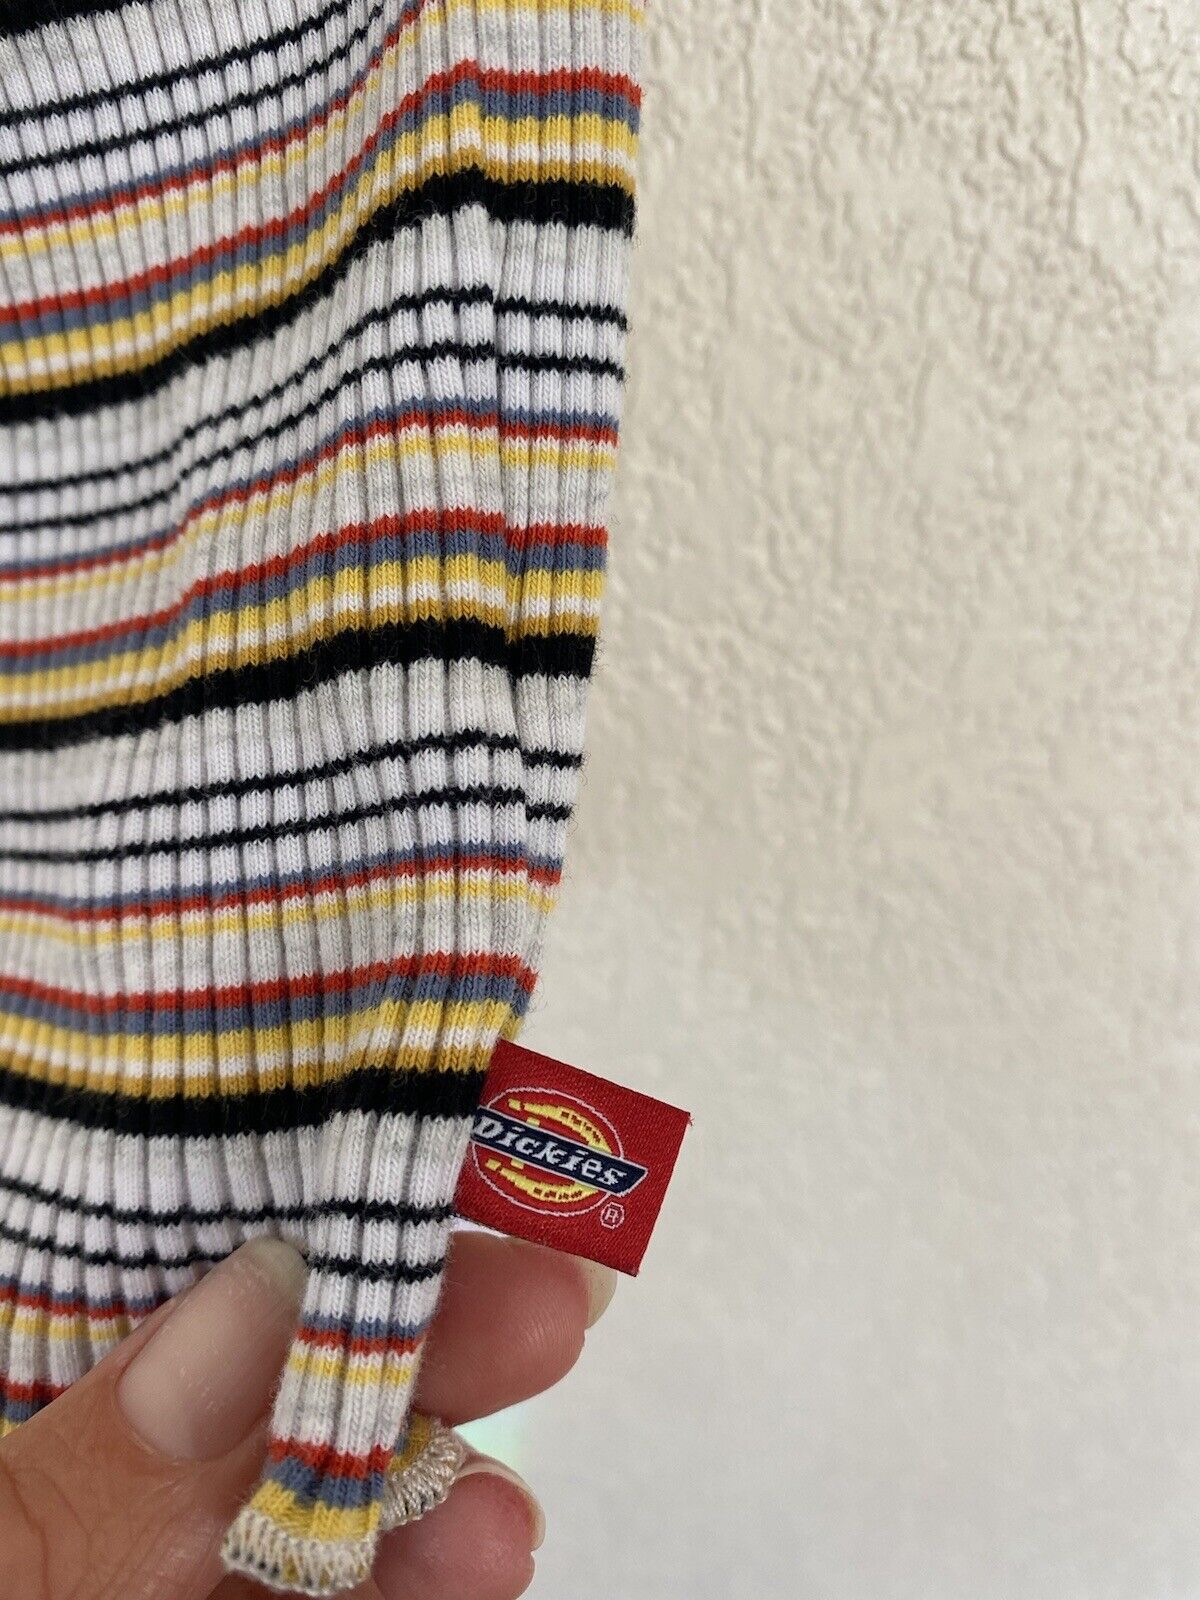 Retro Striped Knit Camisole - Dickies - Women’s XS # 2626